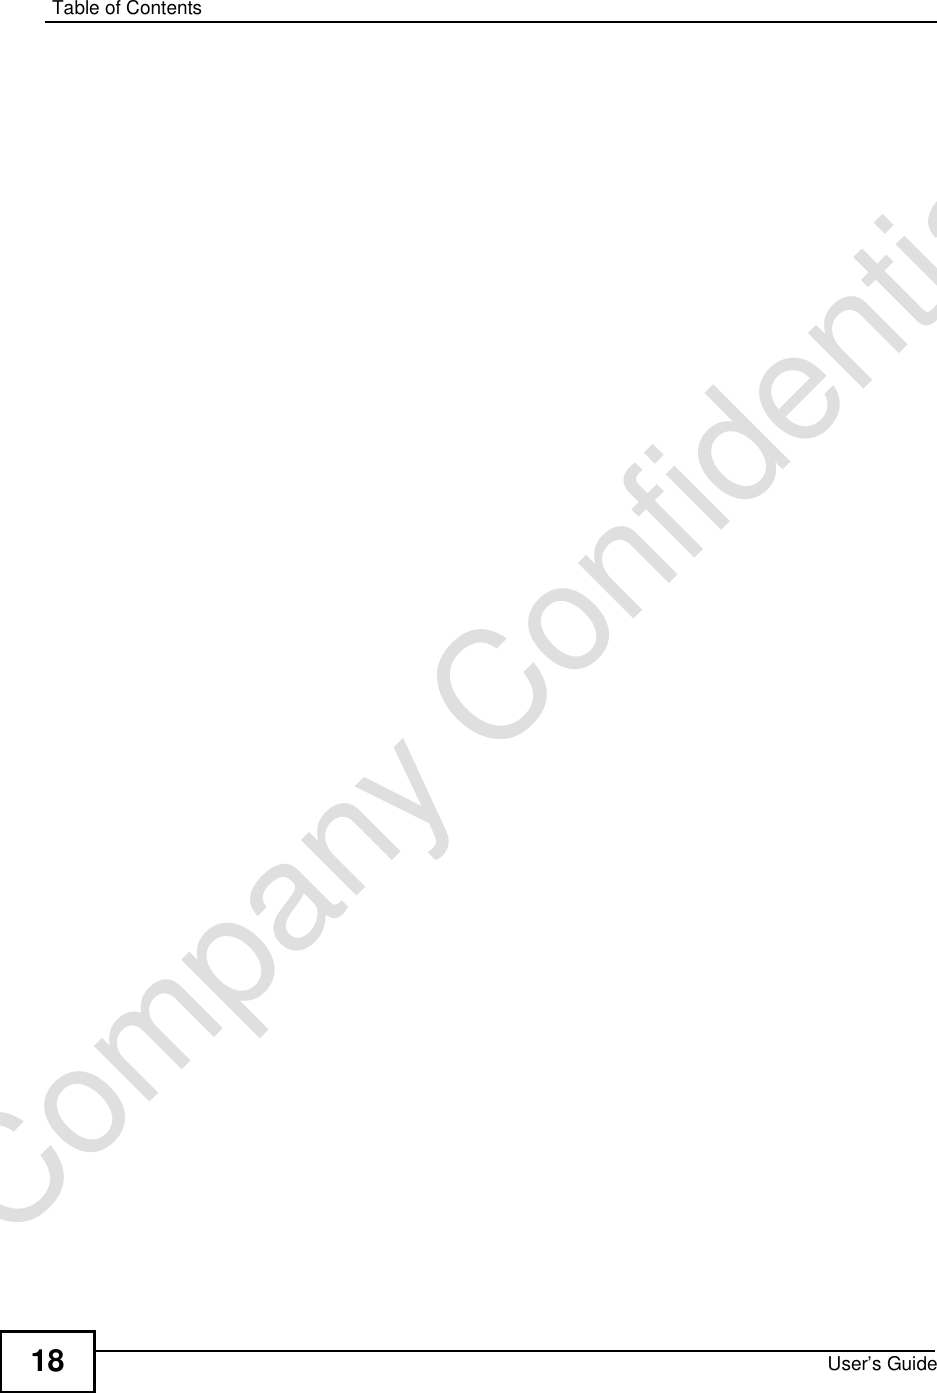 Table of ContentsUser’s Guide18Company Confidential